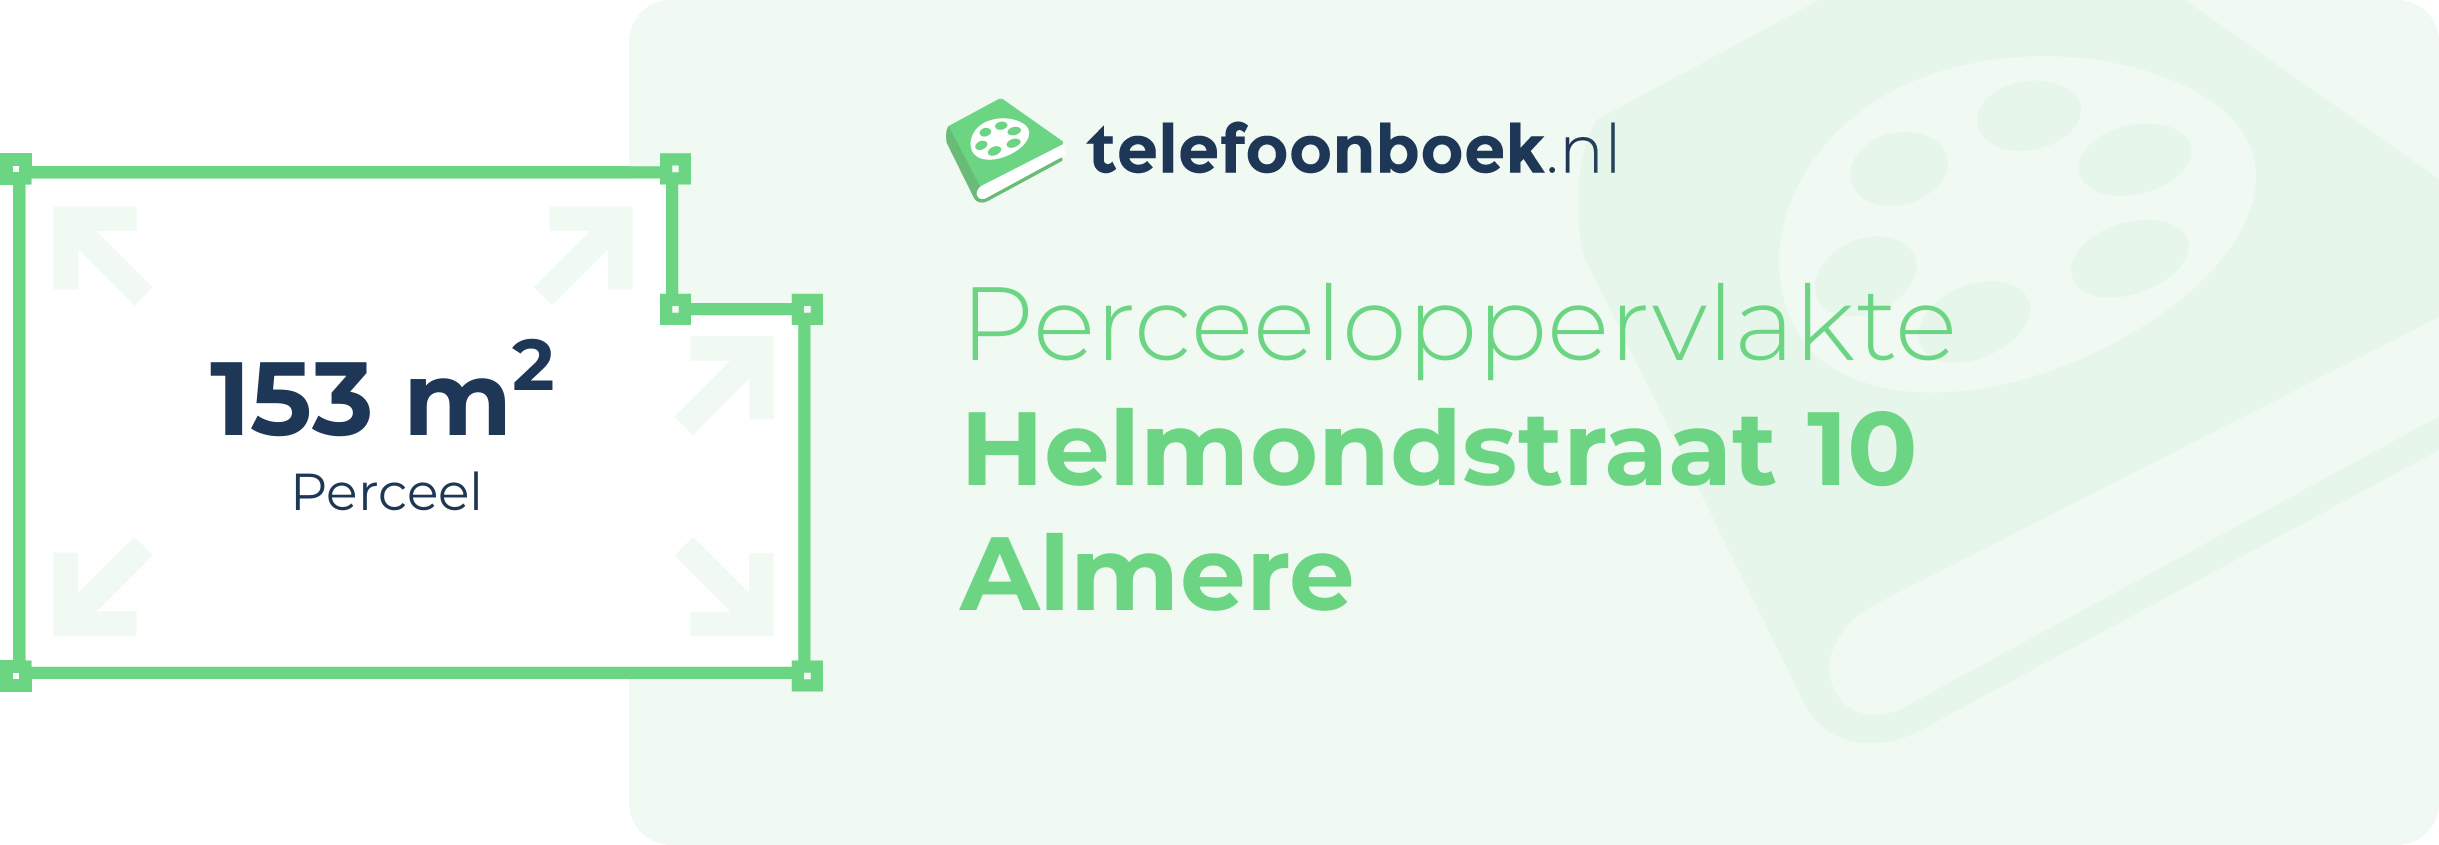 Perceeloppervlakte Helmondstraat 10 Almere